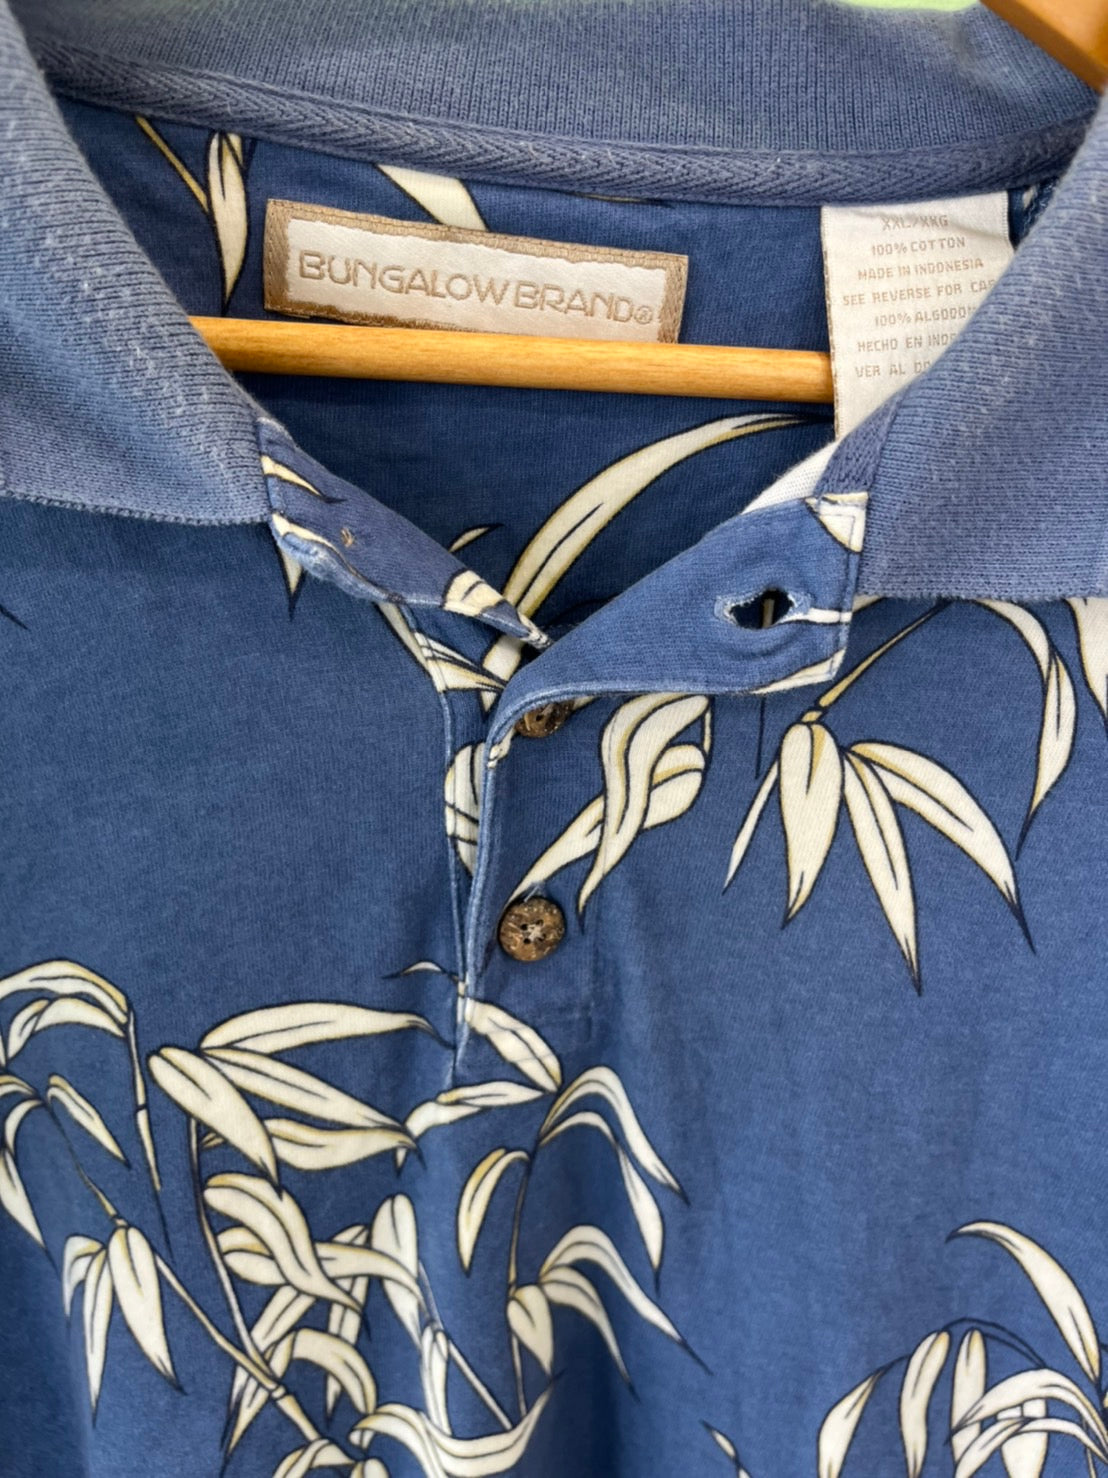 【BIMGALOW BRAND】vintage polo shirt  くすみ リーフ柄 アロハ ポロシャツ(men's XXL)